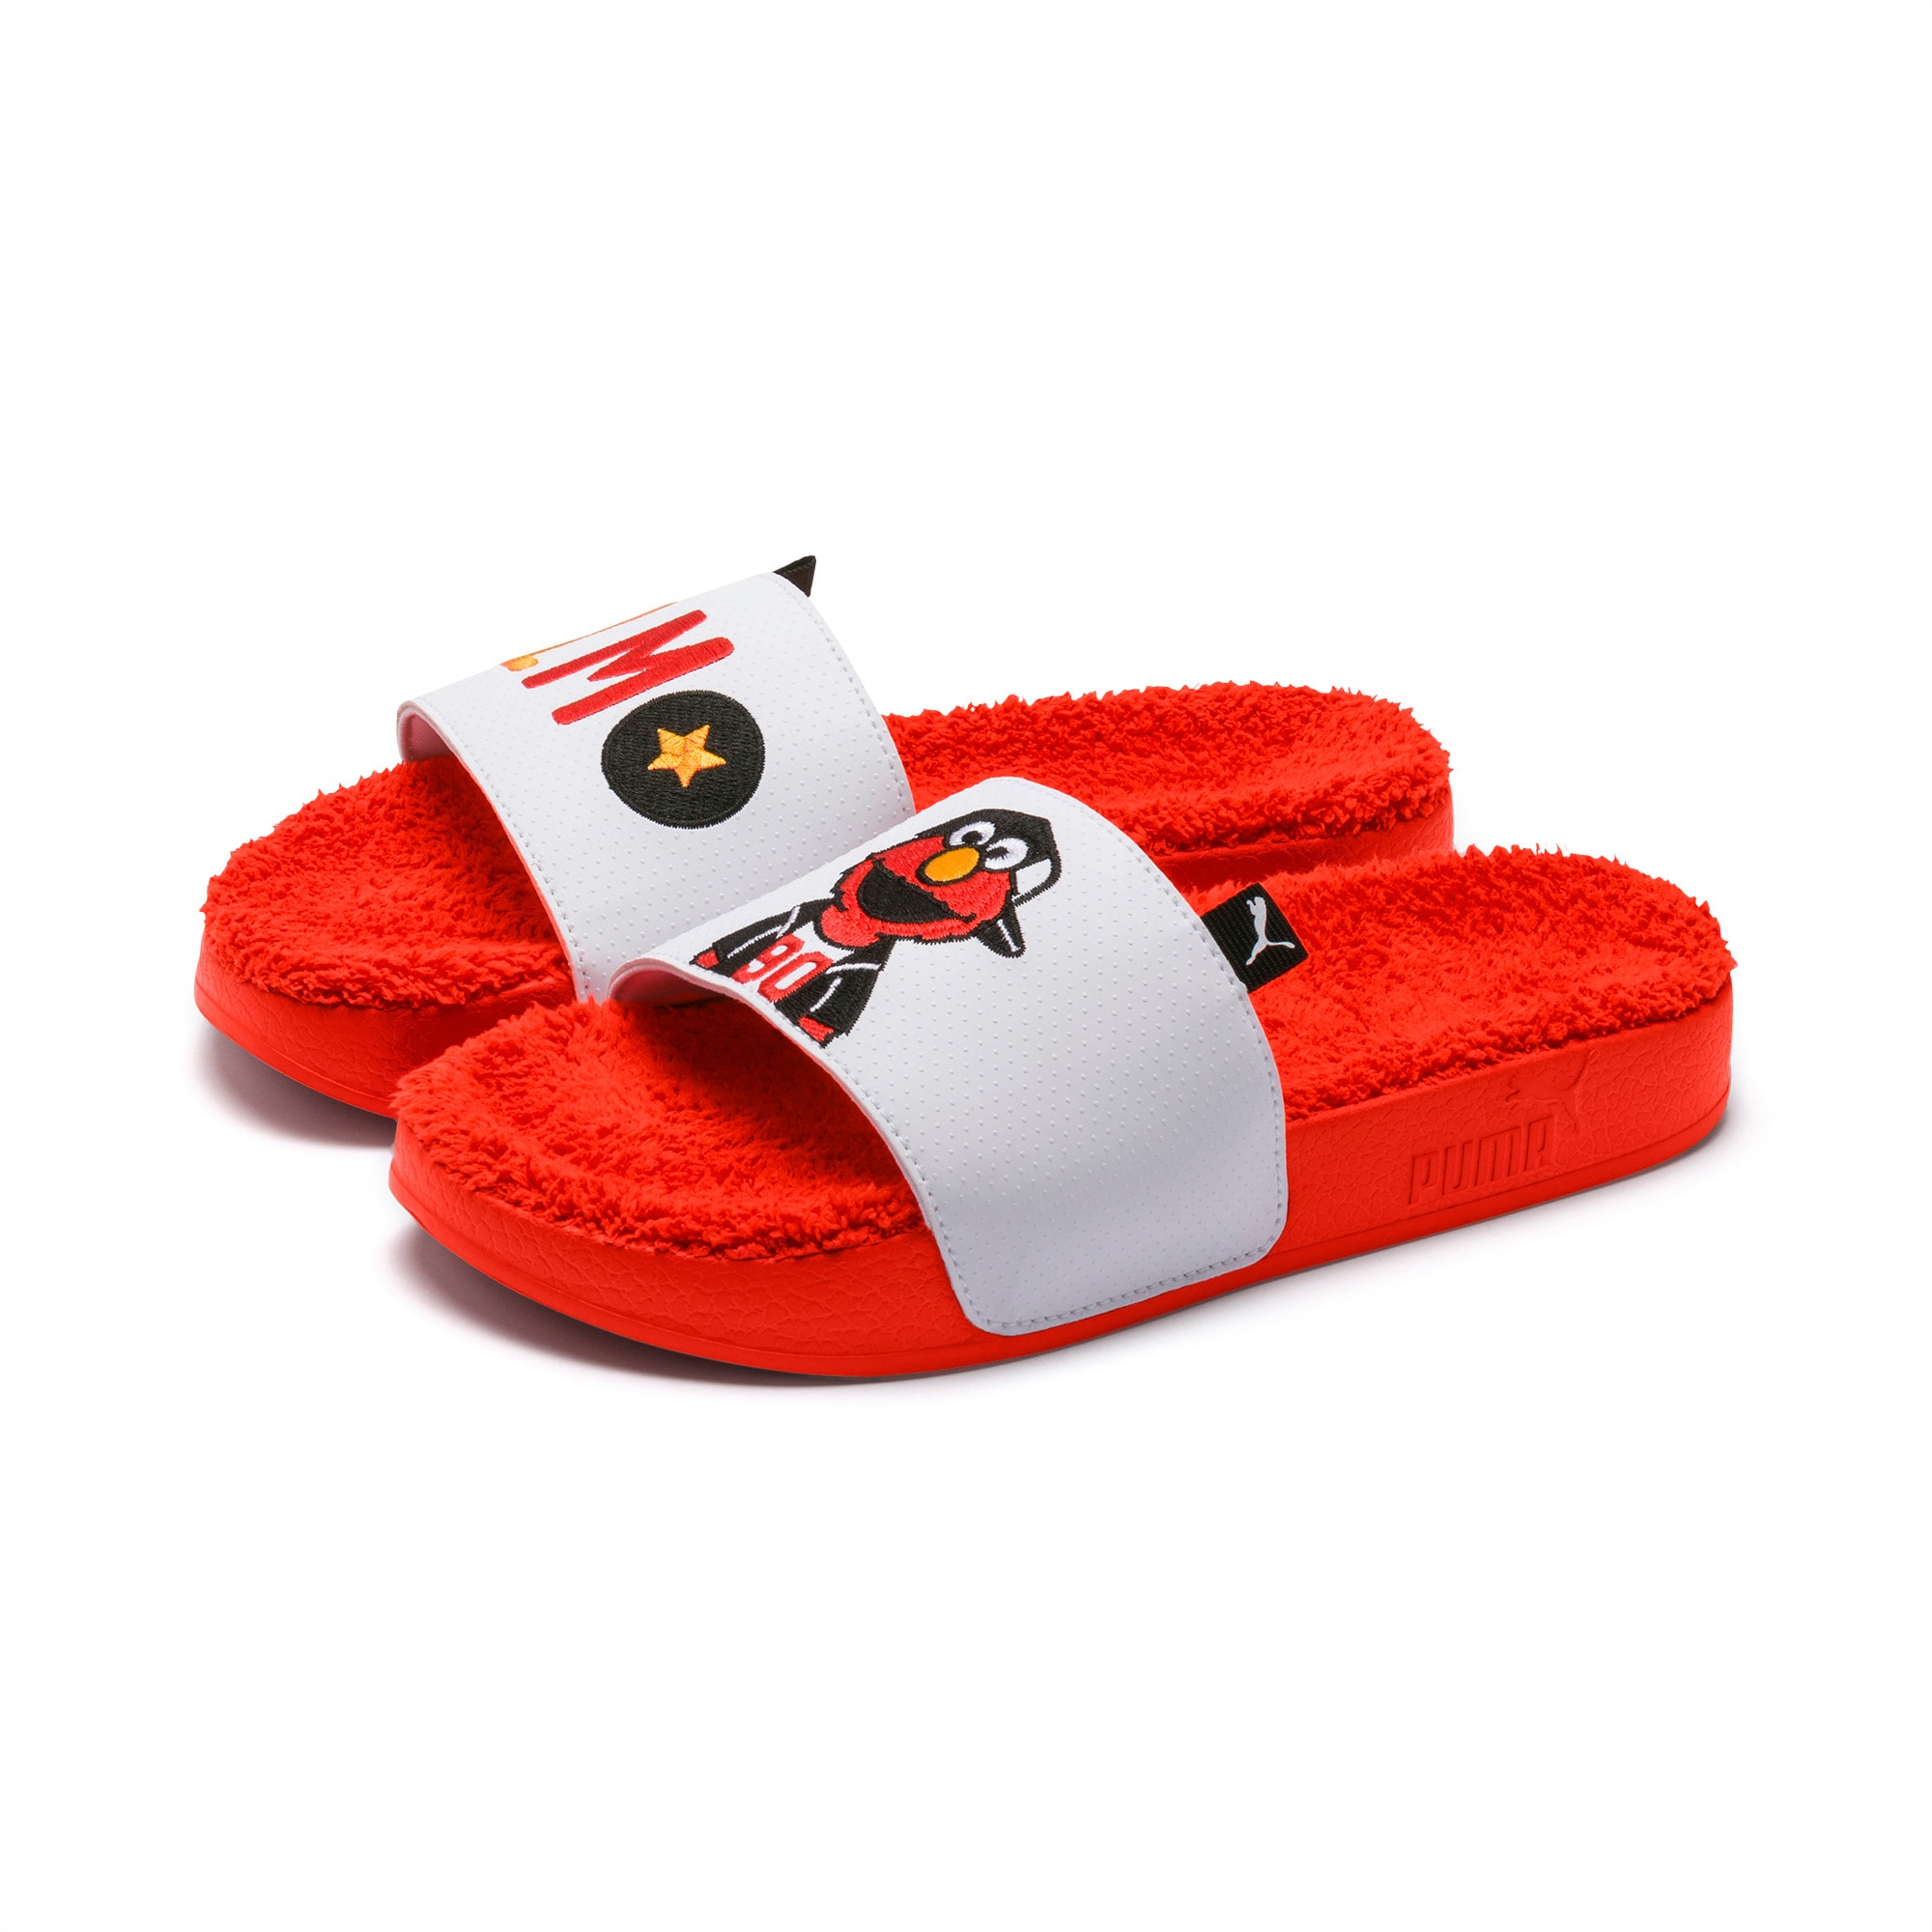 puma slippers elmo off 56% - www 